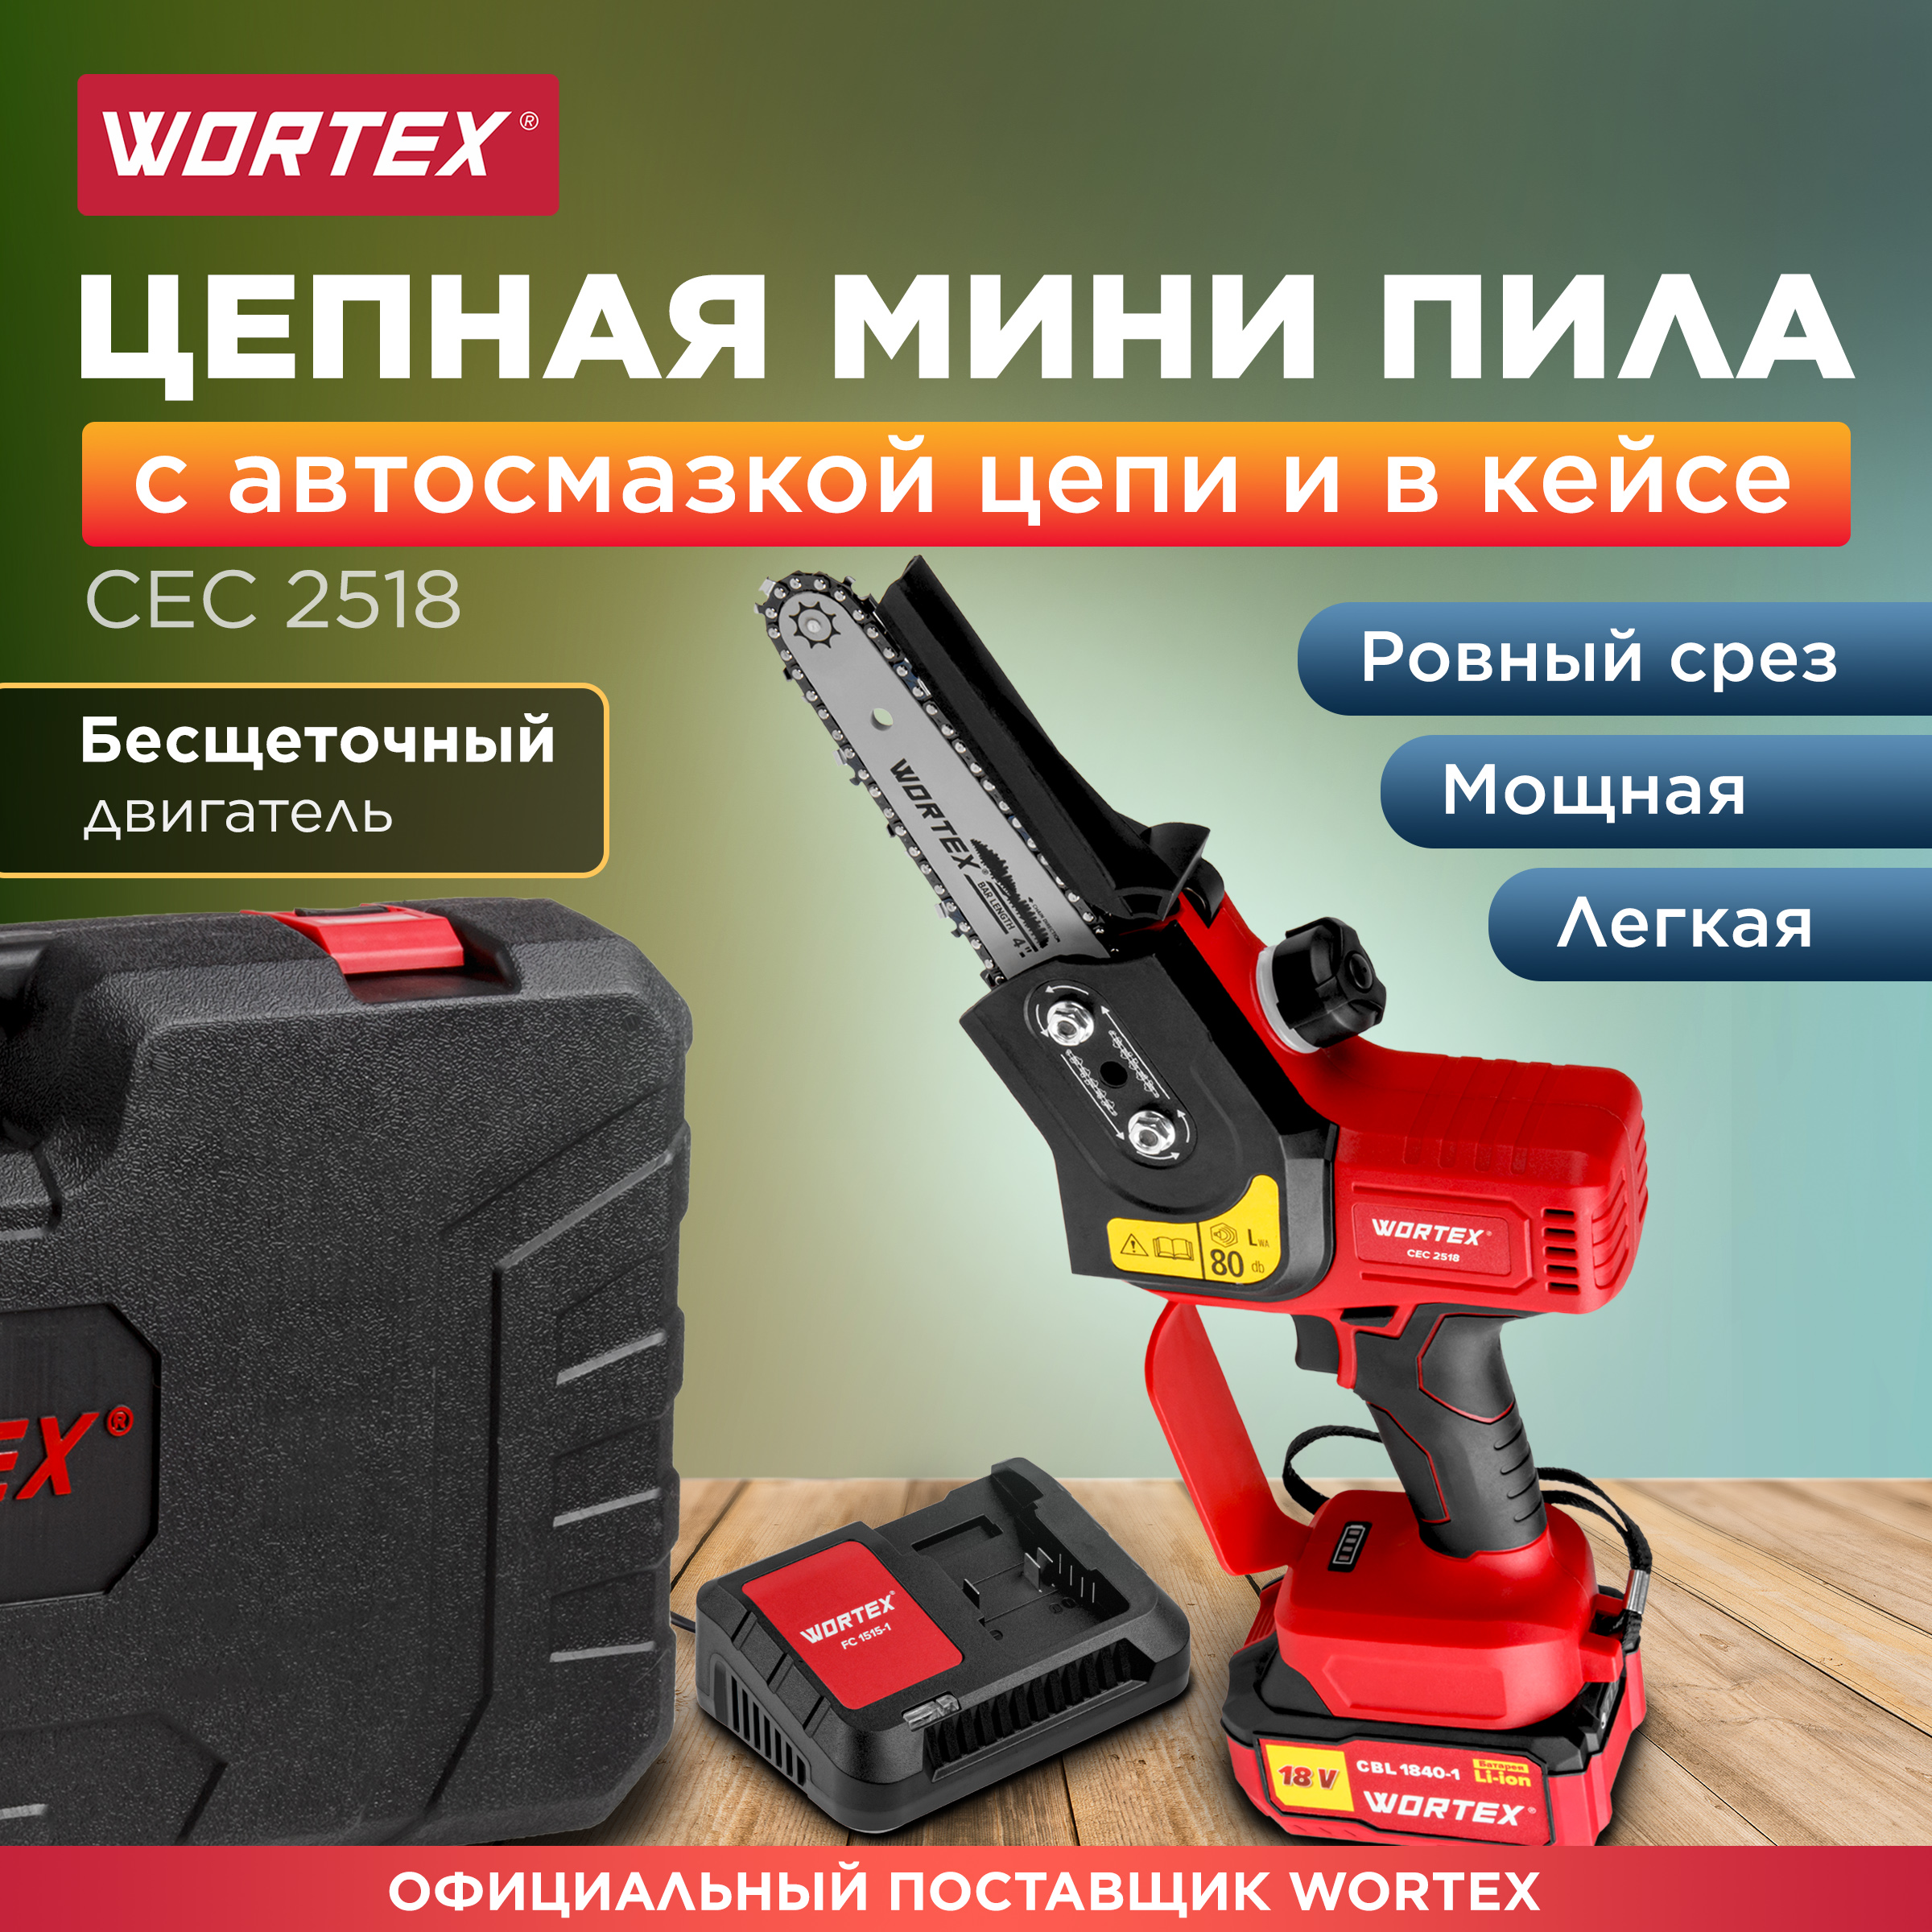 Пила цепная аккумуляторная WORTEX CEC 2518 ALL1